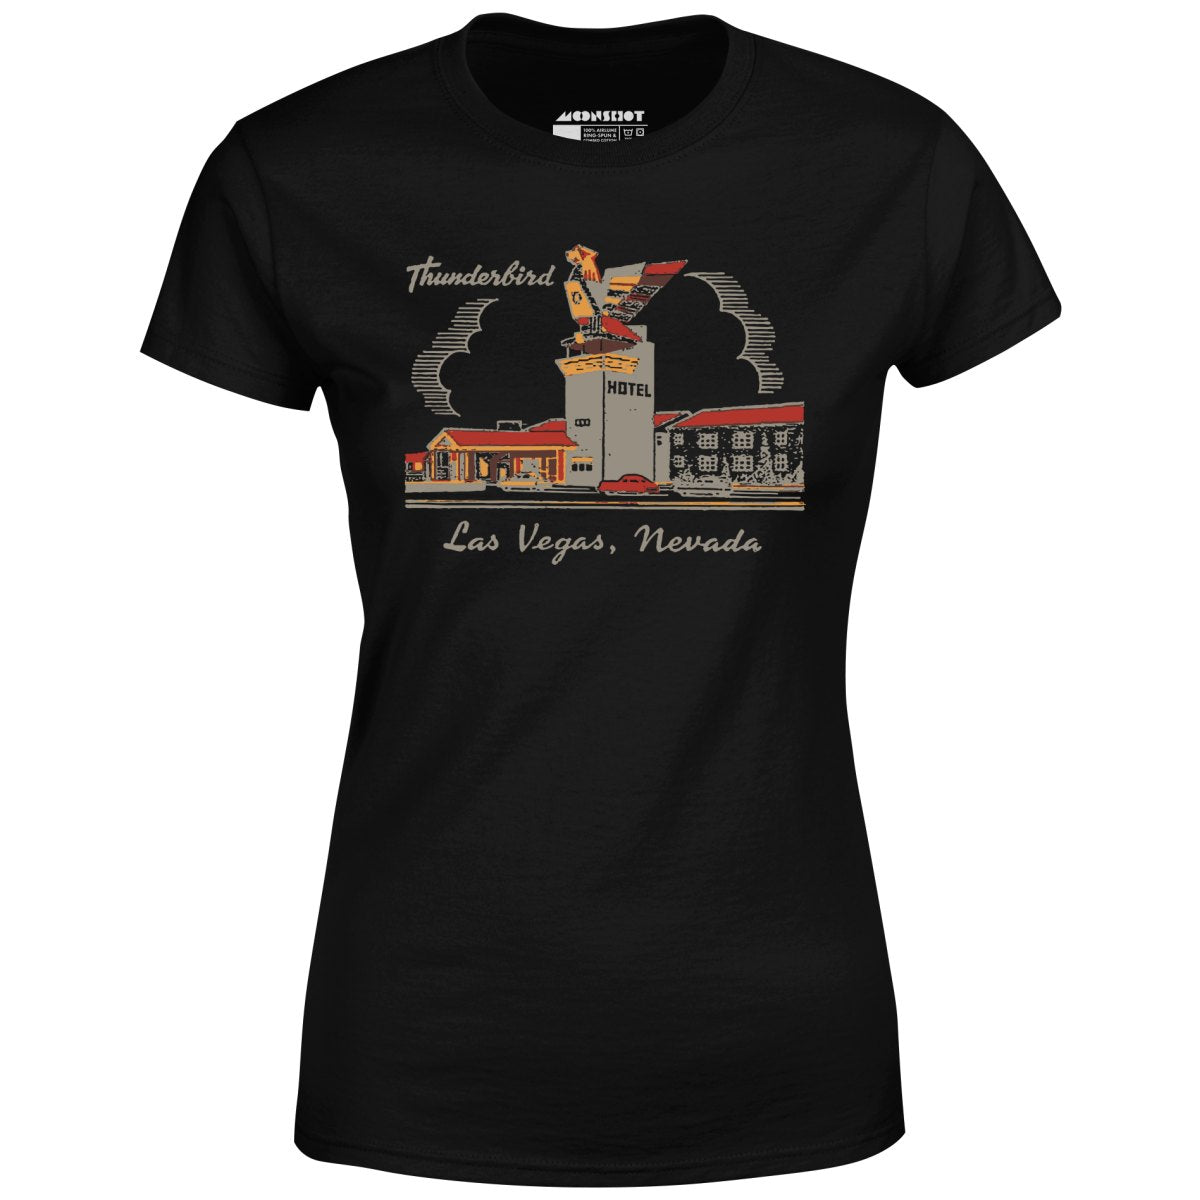 Thunderbird Hotel v2 - Vintage Las Vegas - Women's T-Shirt